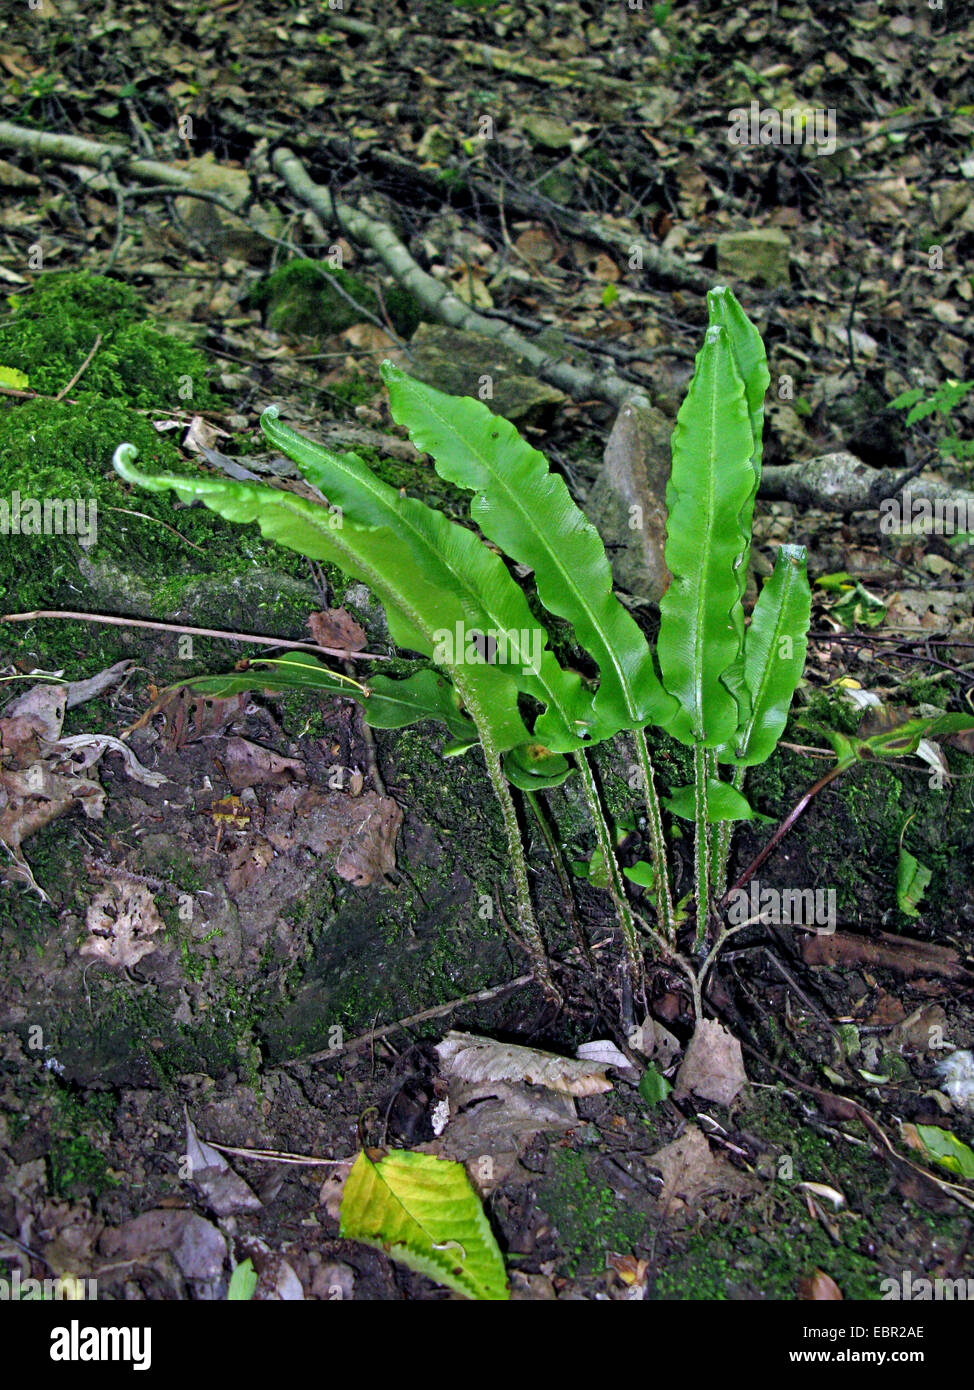 hart's tongue, European harts-tongue fern (Asplenium scolopendrium, Phyllitis scolopendrium), in a rock crevice, Germany, North Rhine-Westphalia Stock Photo